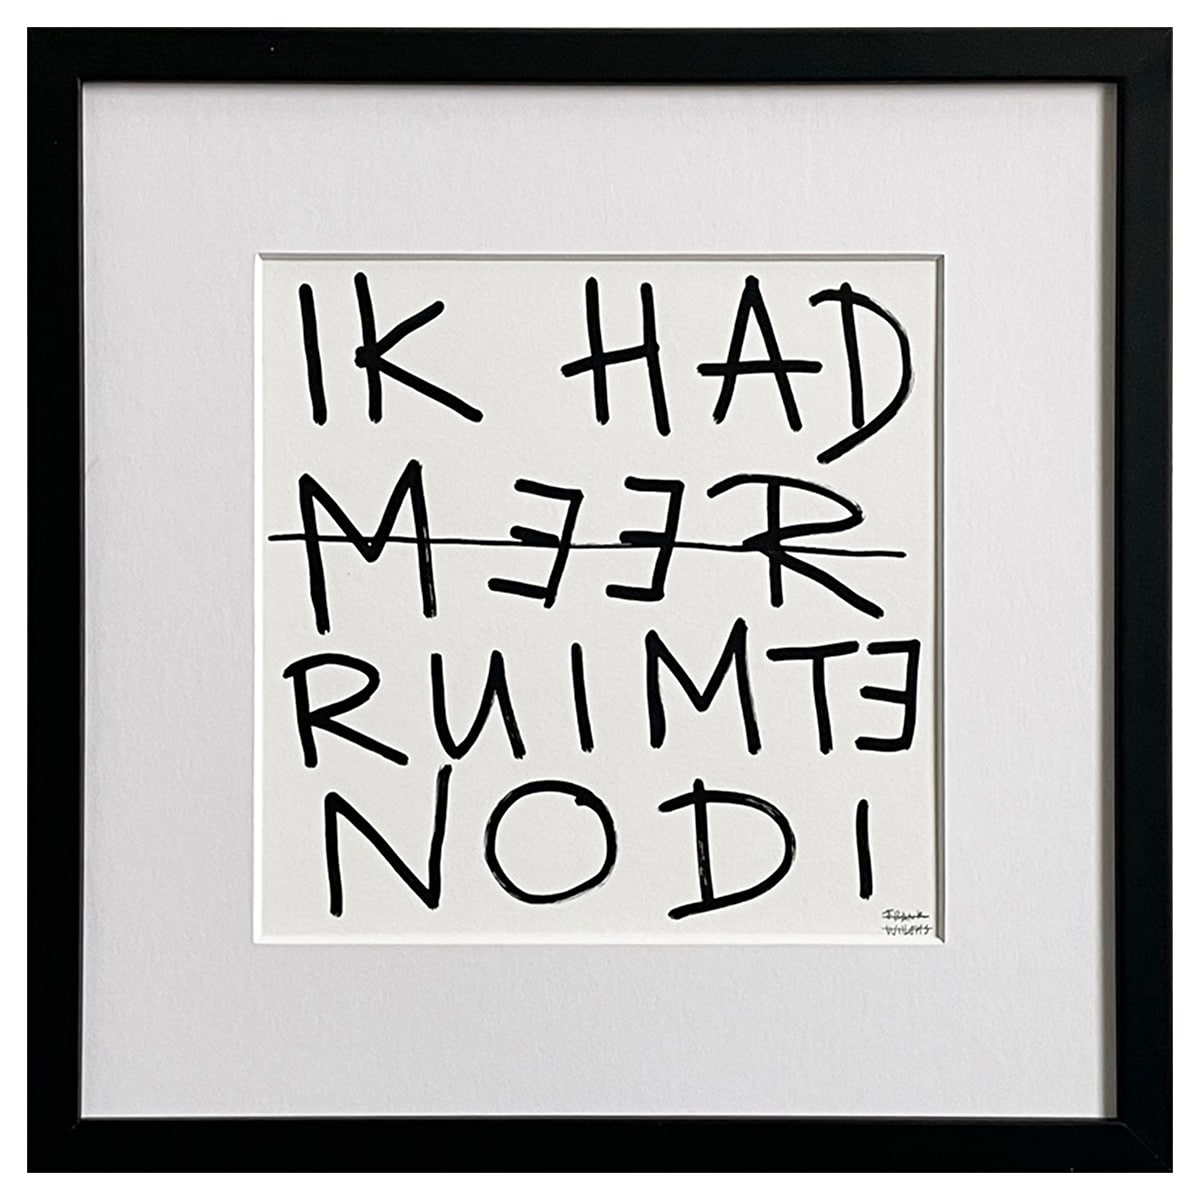 Limited Edt Text Prints - IK HAD MEER RUIMTE NODIG - Frank Willems